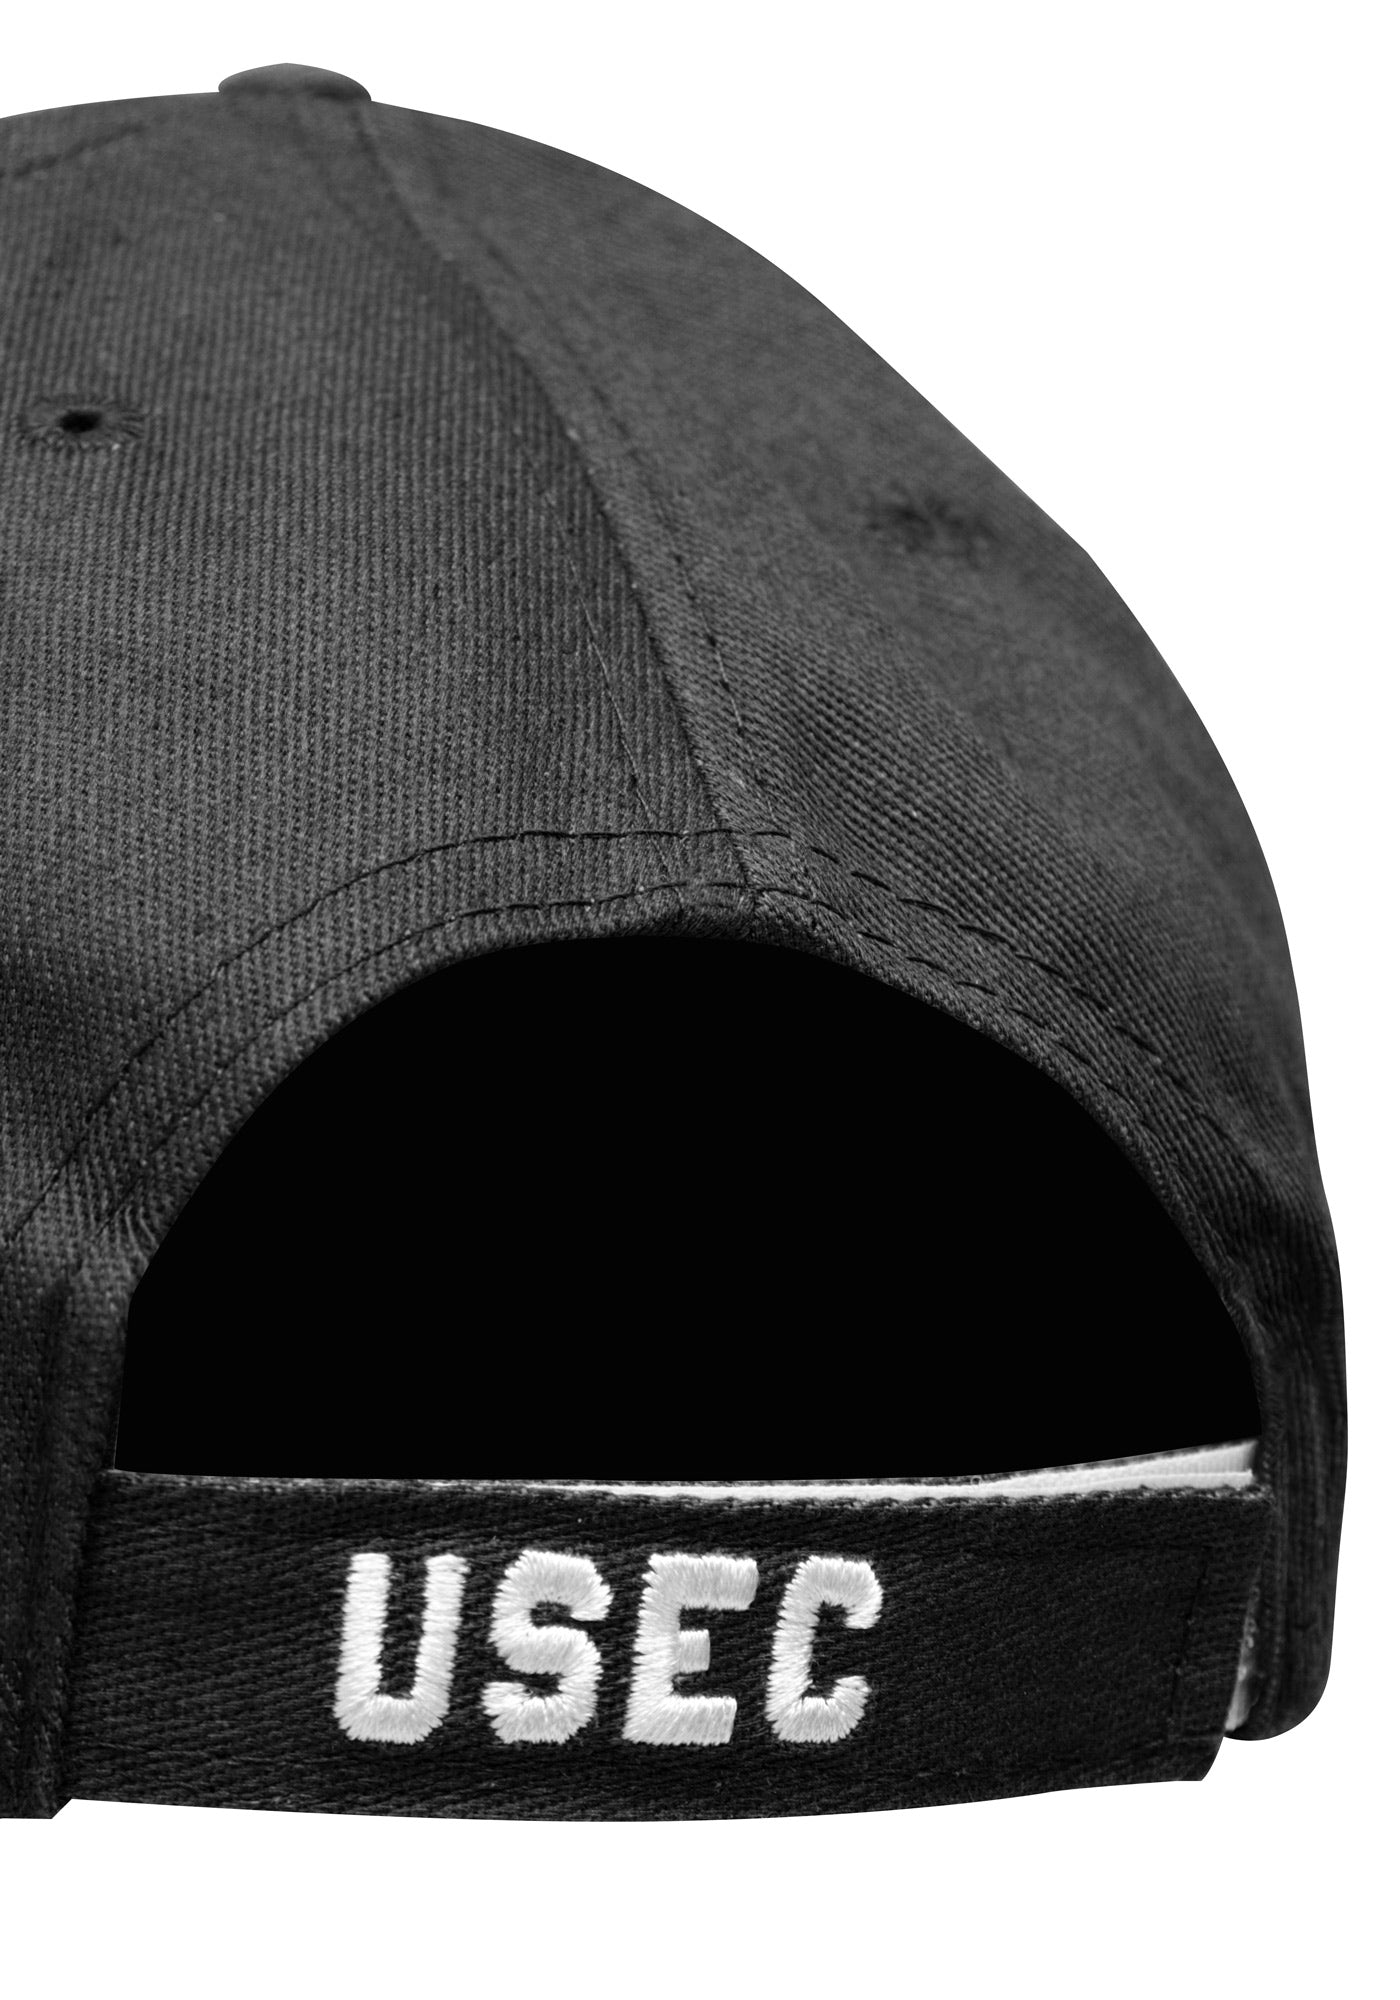 DAZCOS USEC Bear Baseball Cap Game Cosplay Accessories